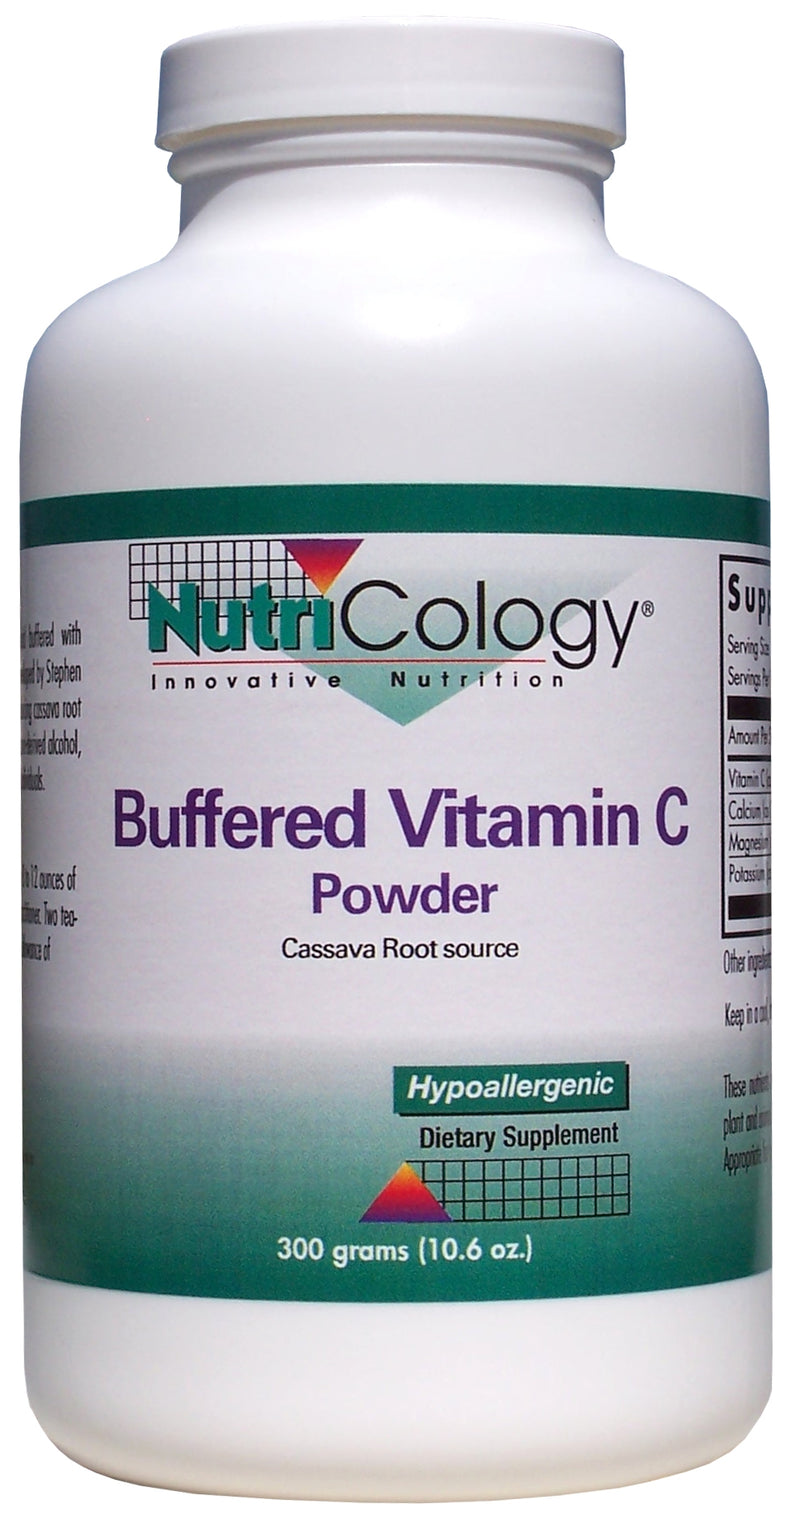 Buffered Vitamin C Powder Cassava Root Source 300 g (10.6 oz)